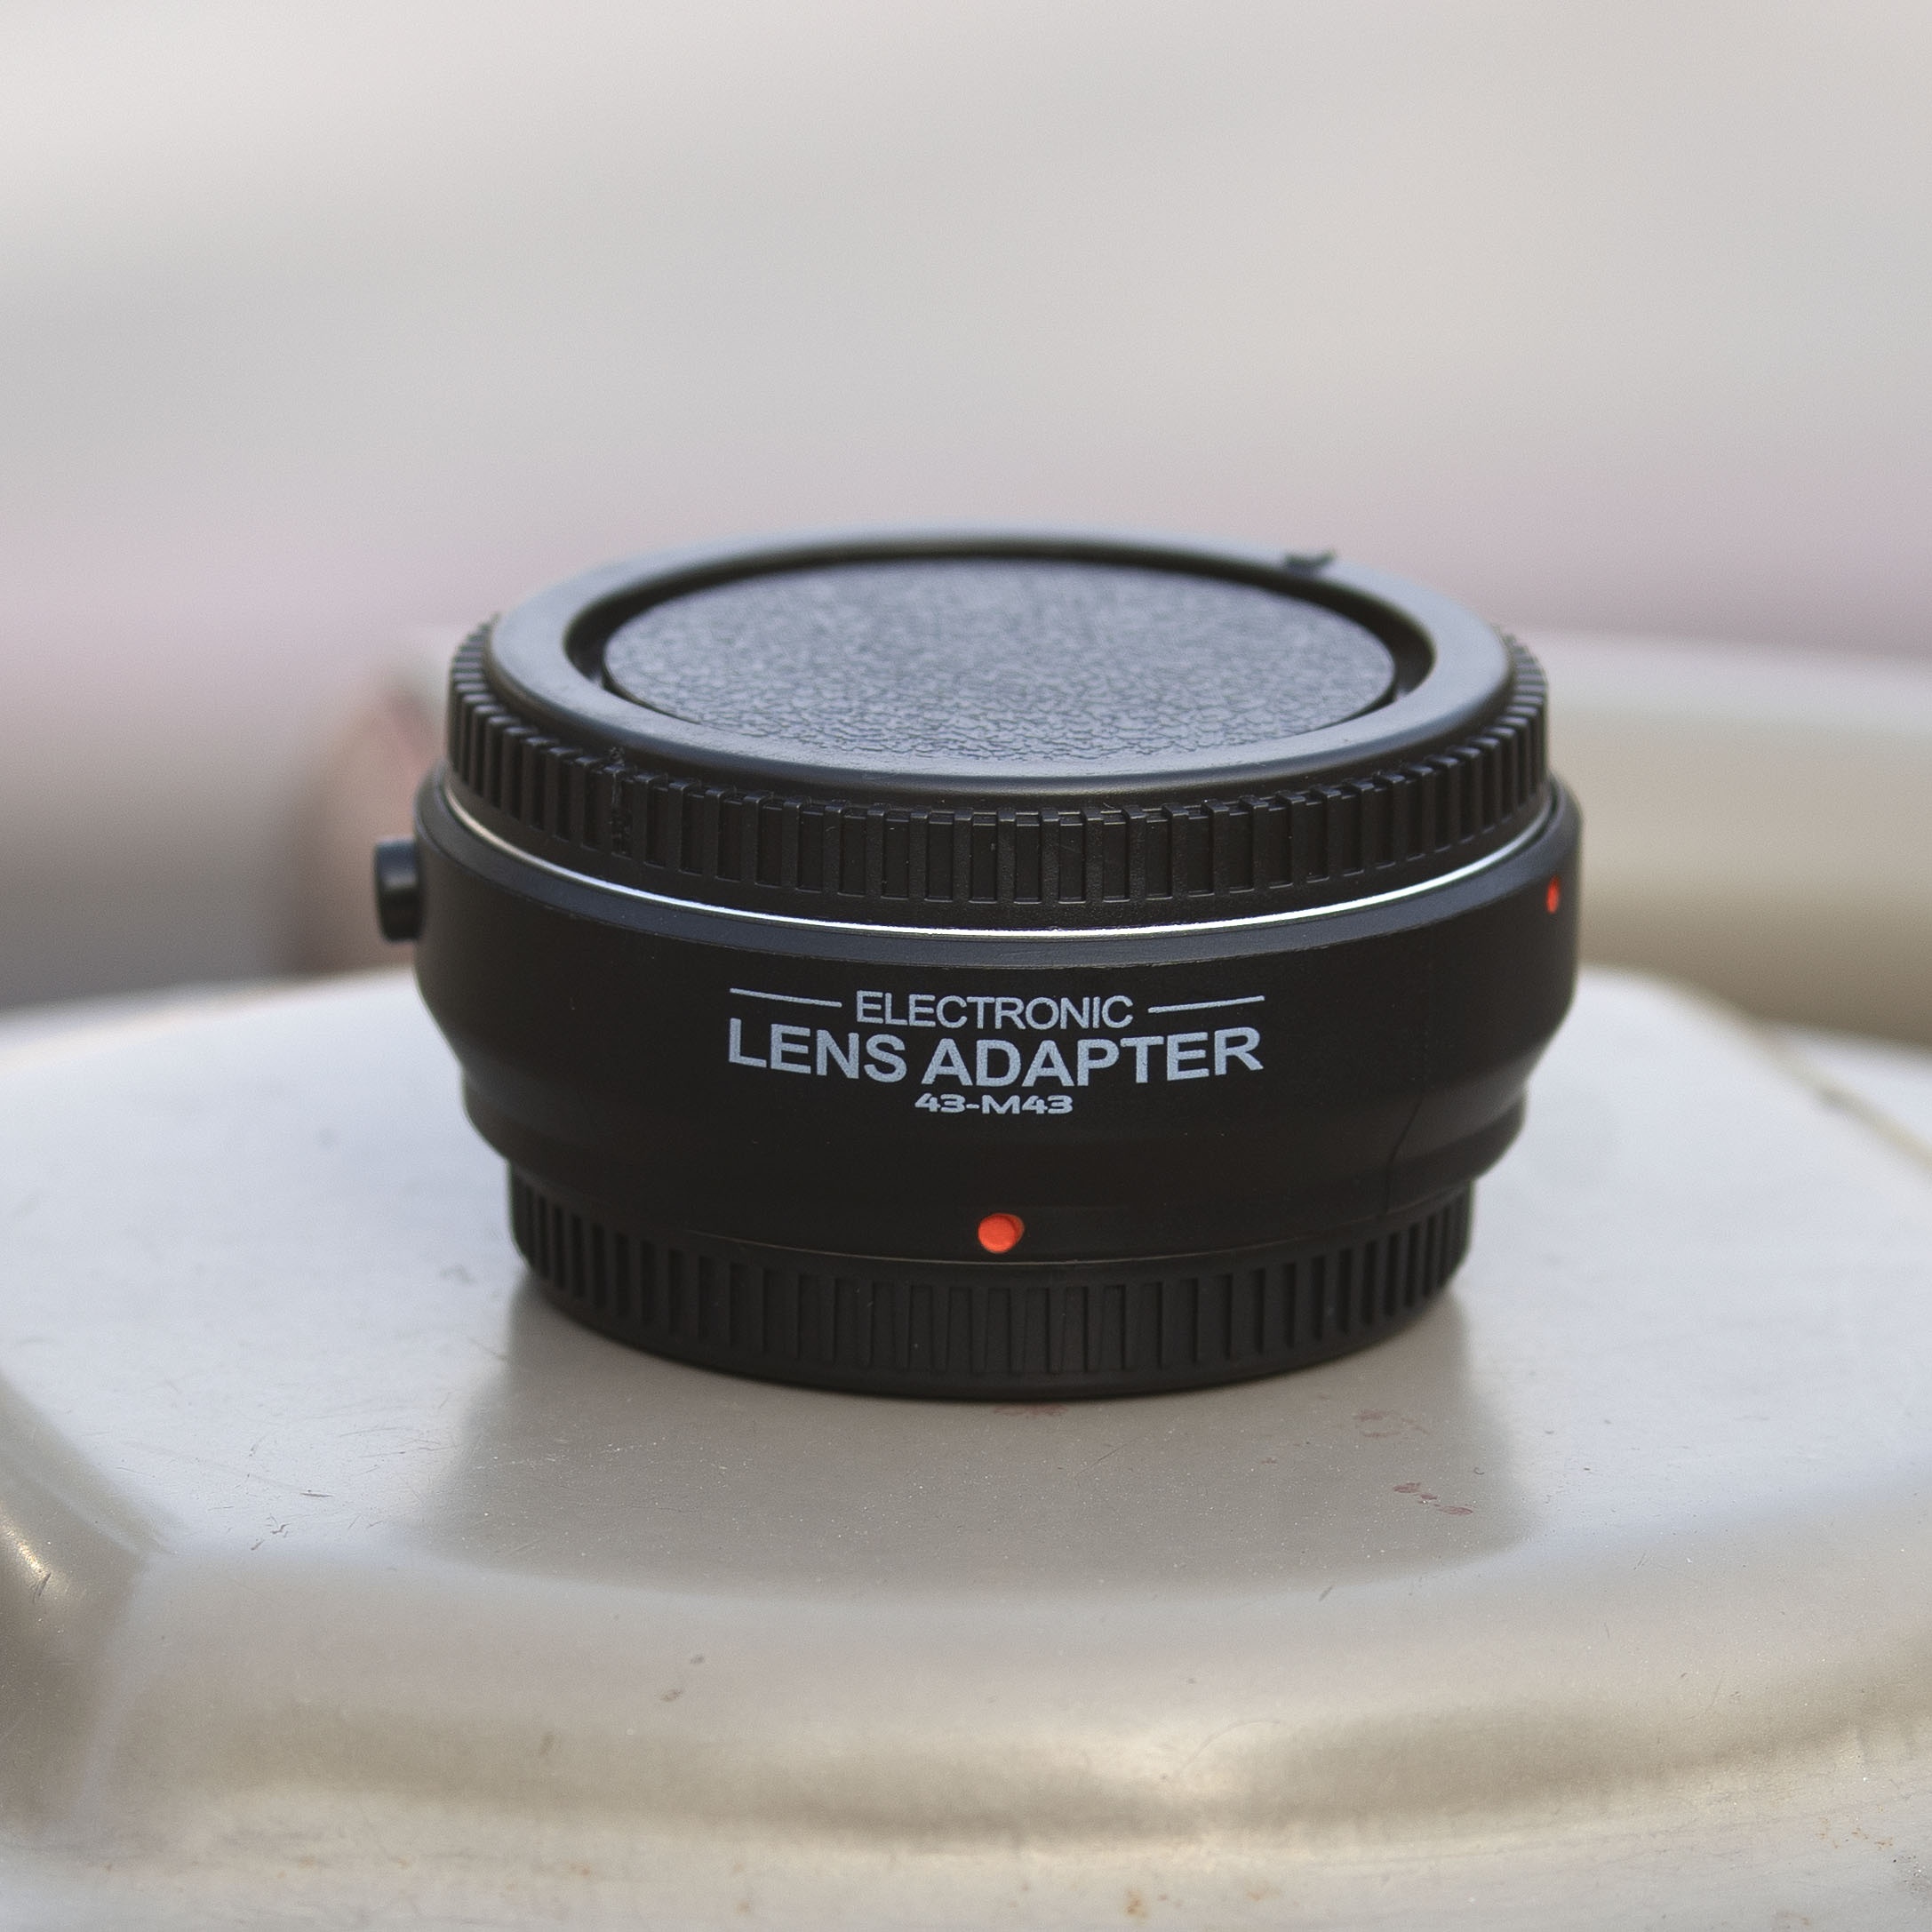 af lens adapter fotga auto focus four thirds (4/3) mount